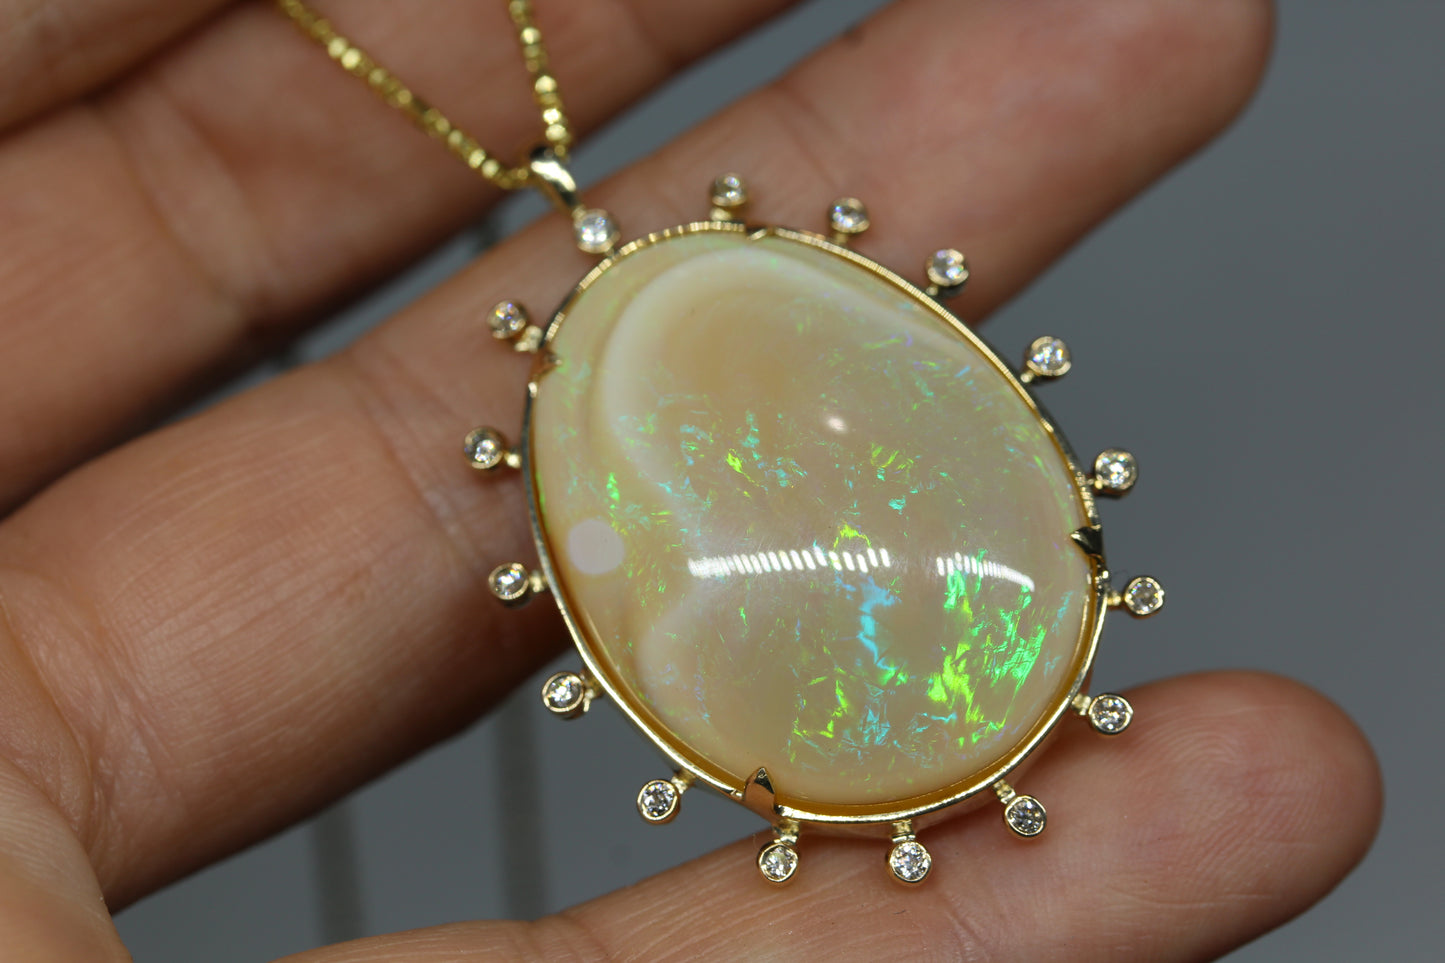 Jelly Opal & Diamond Pendant 14k Yellow Gold Gemstone Necklace #244